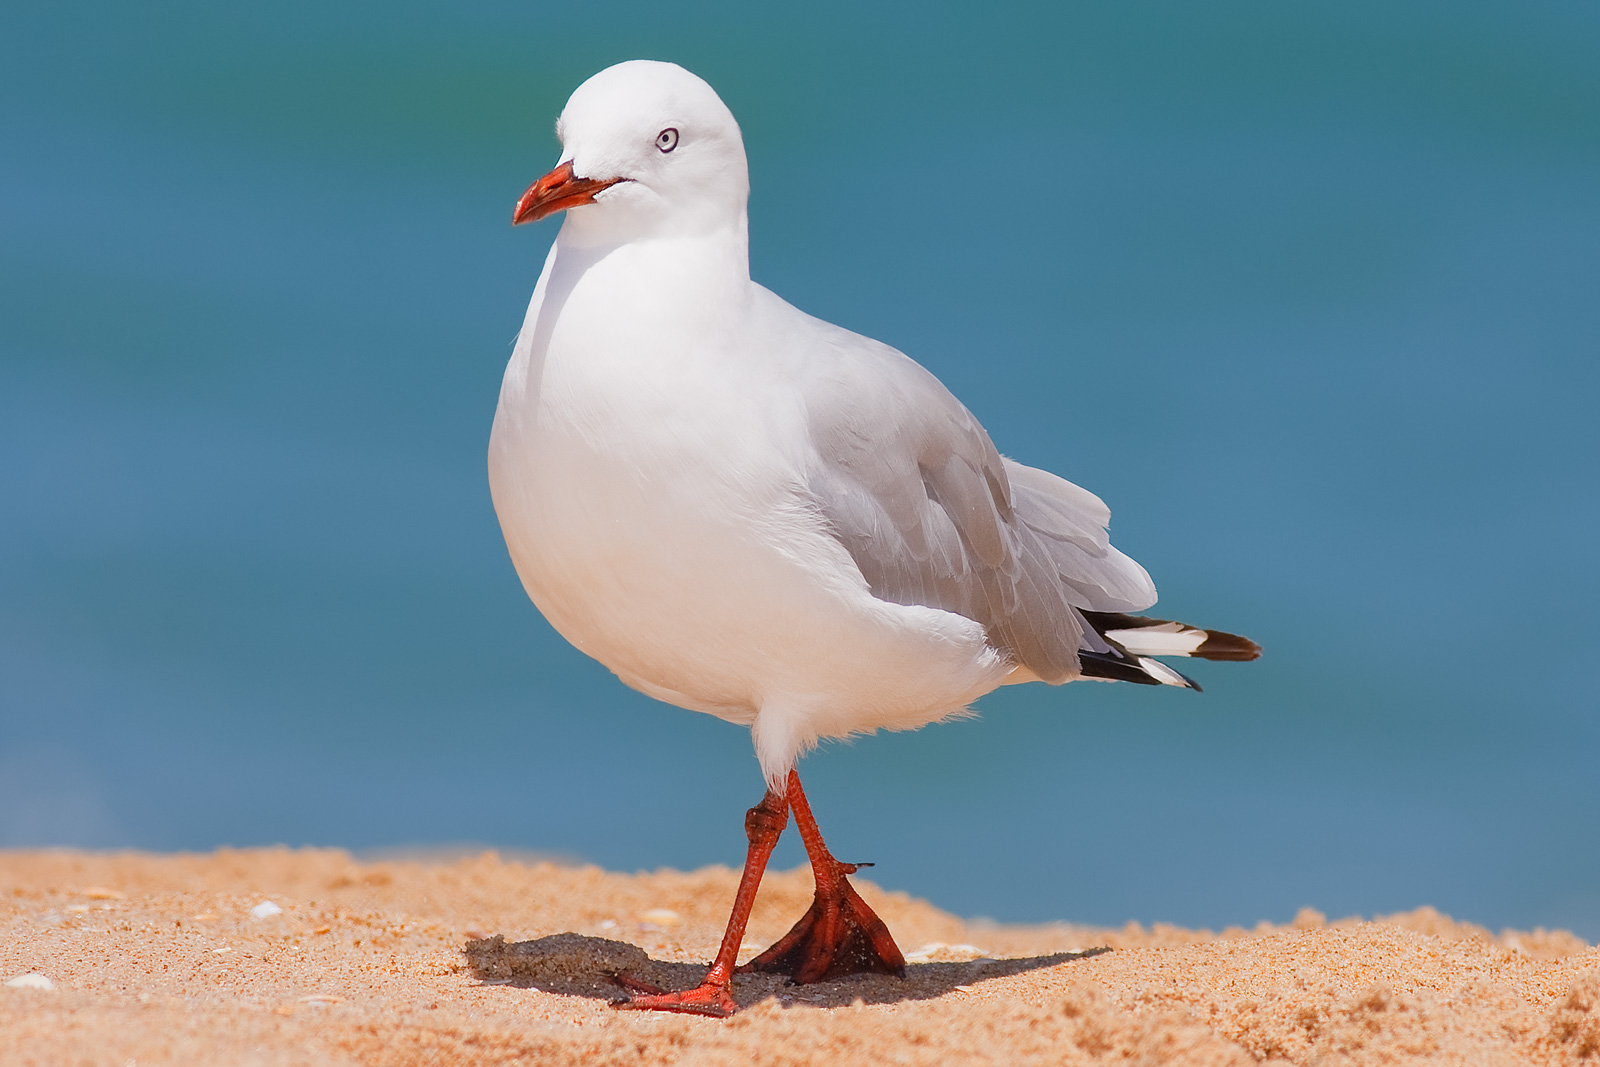 Where do seagulls live in Australia?